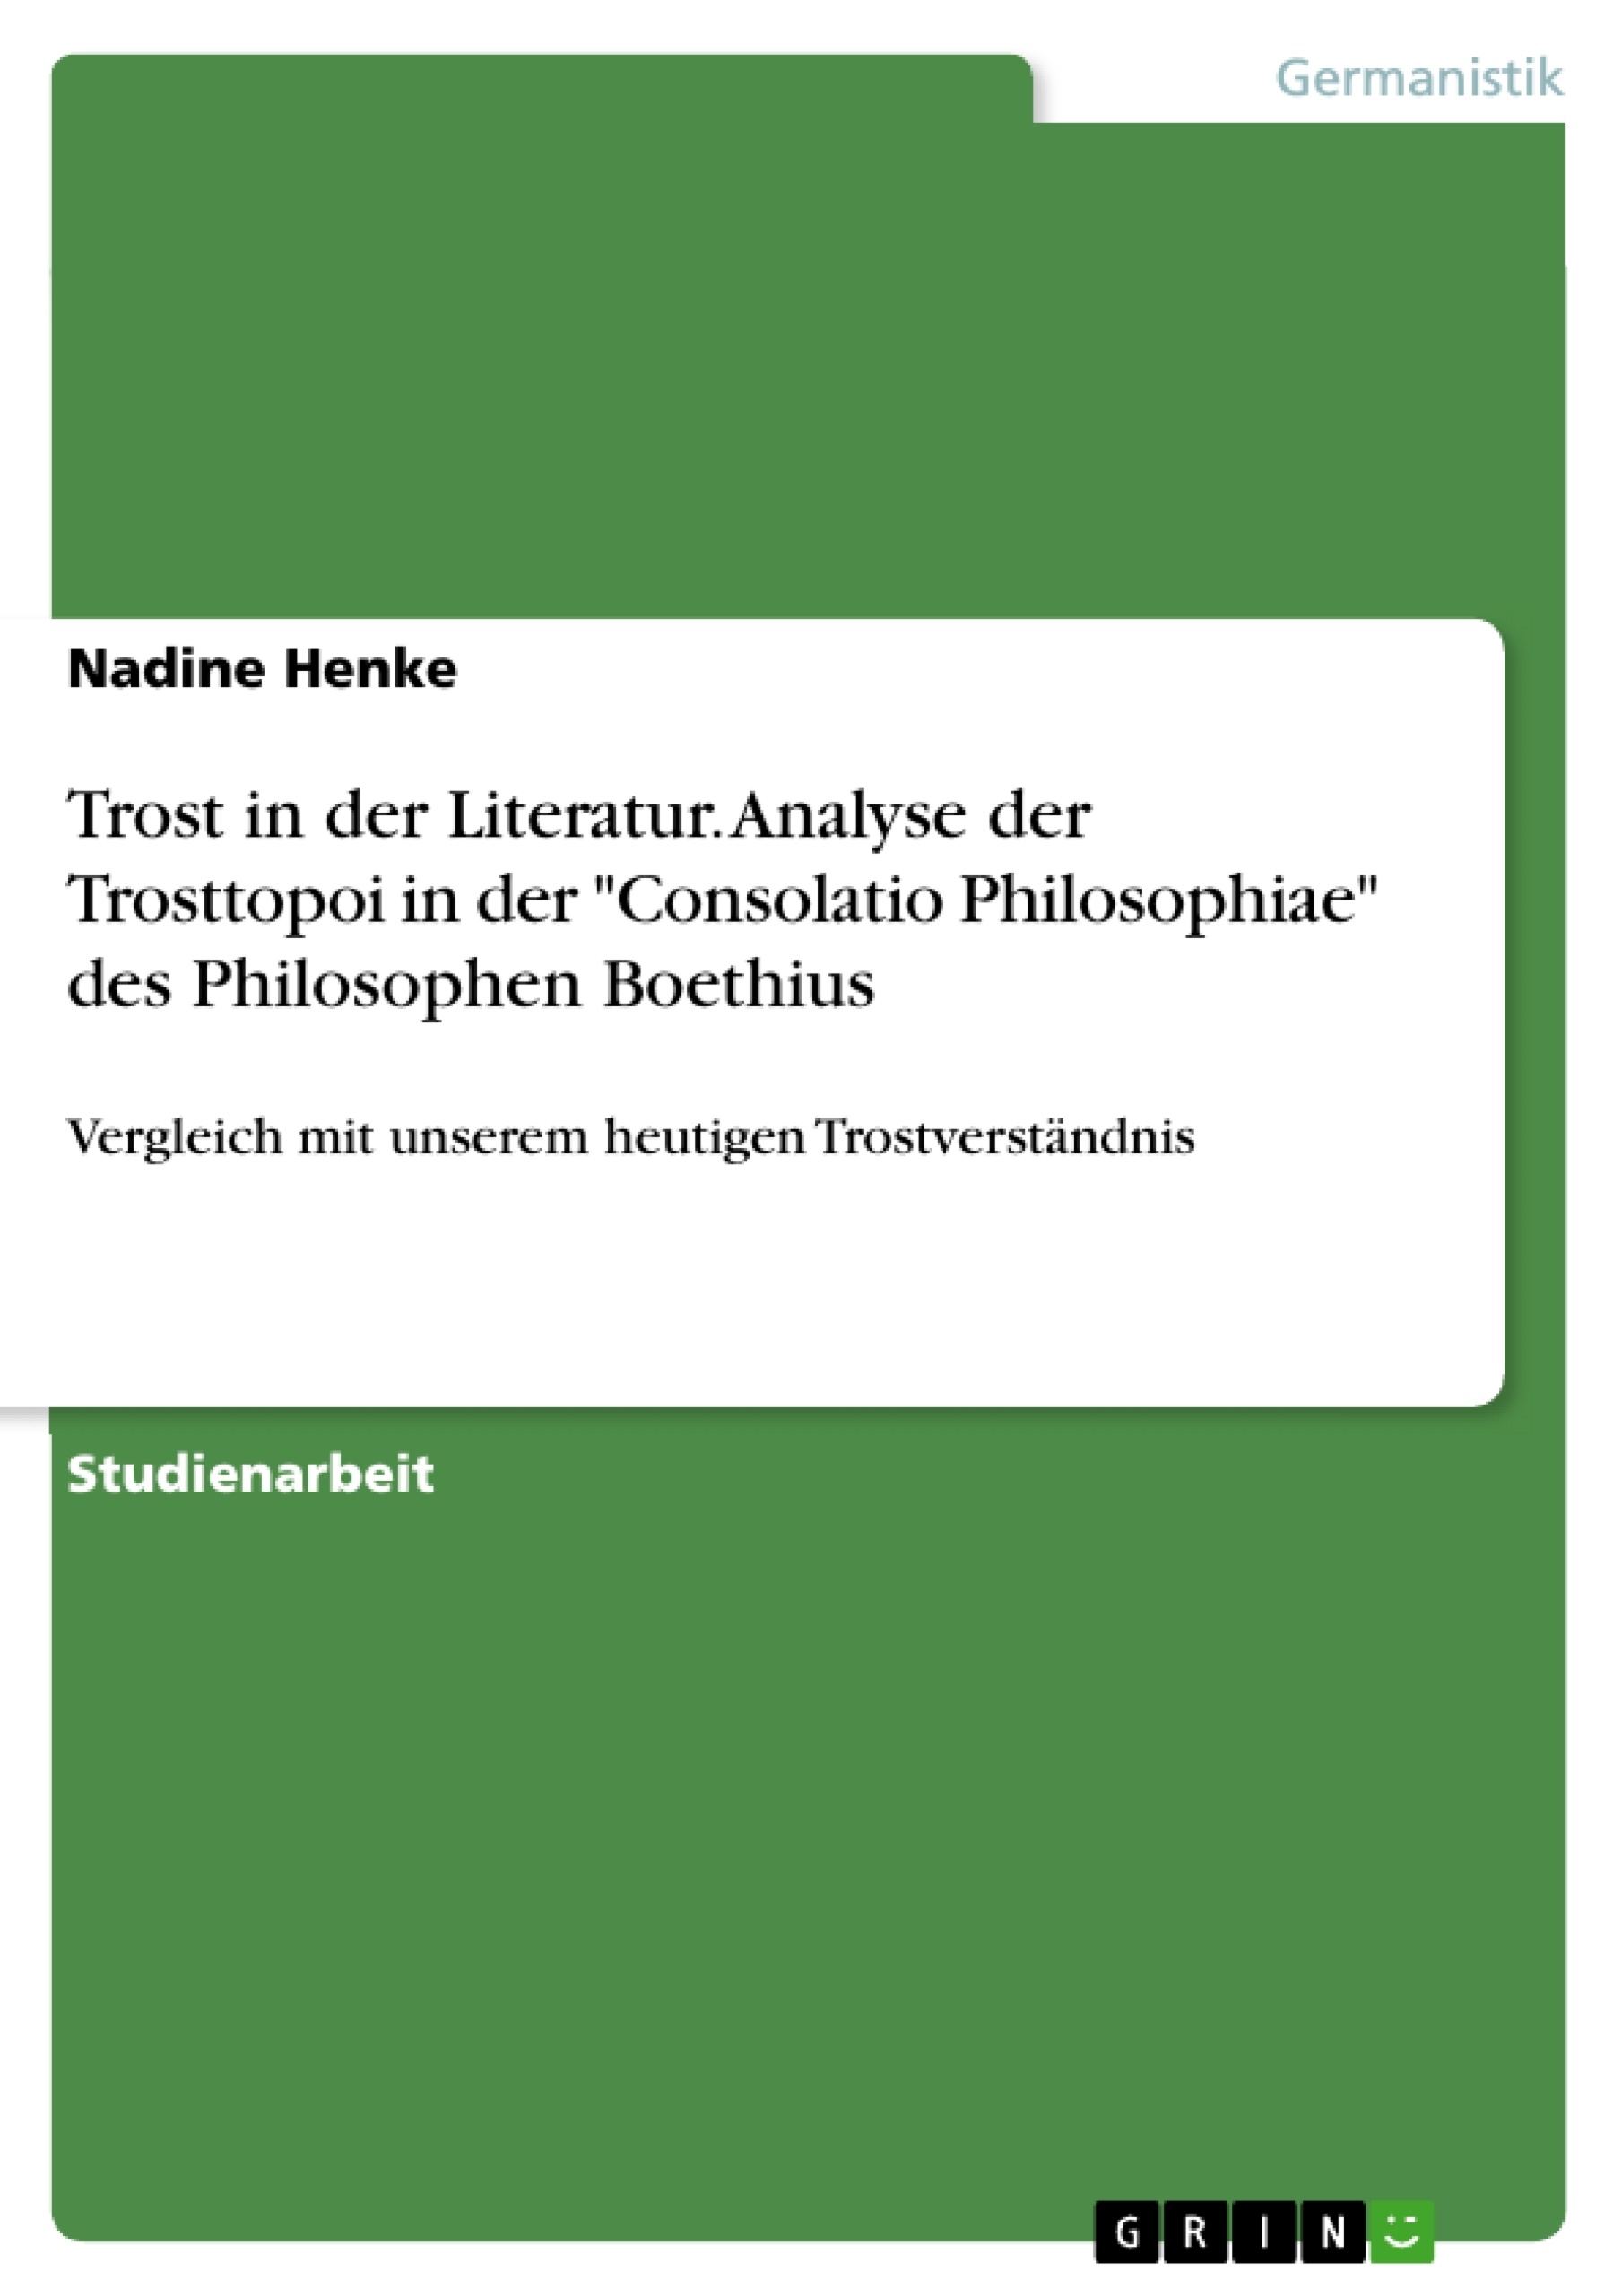 Titre: Trost in der Literatur. Analyse der Trosttopoi in der "Consolatio Philosophiae" des Philosophen Boethius